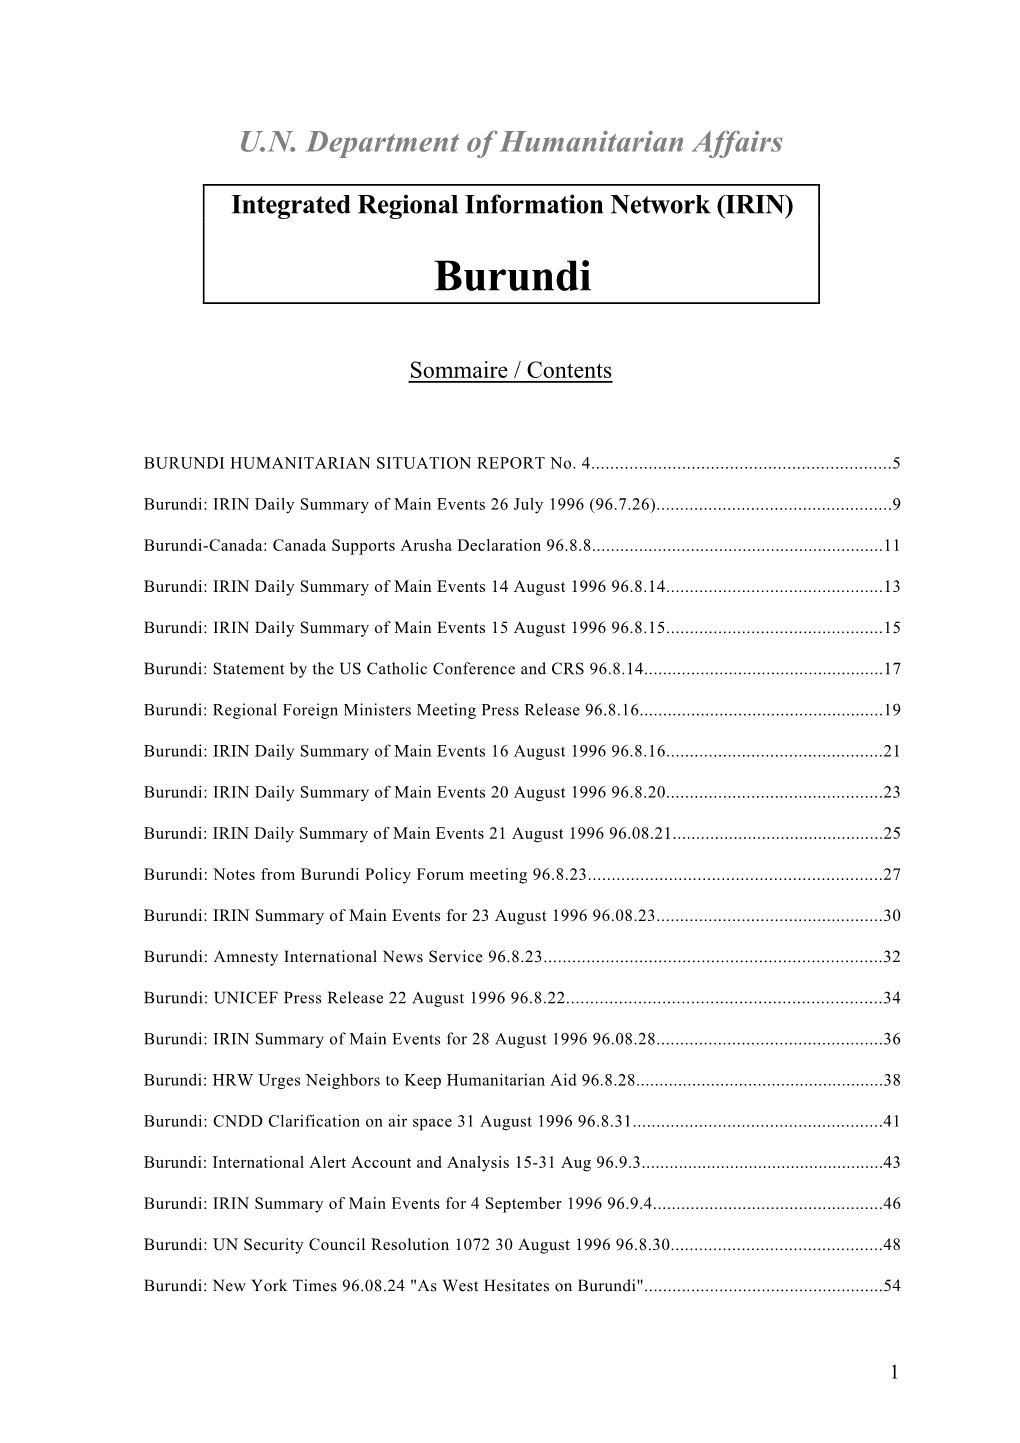 Integrated Regional Information Network (IRIN): Burundi